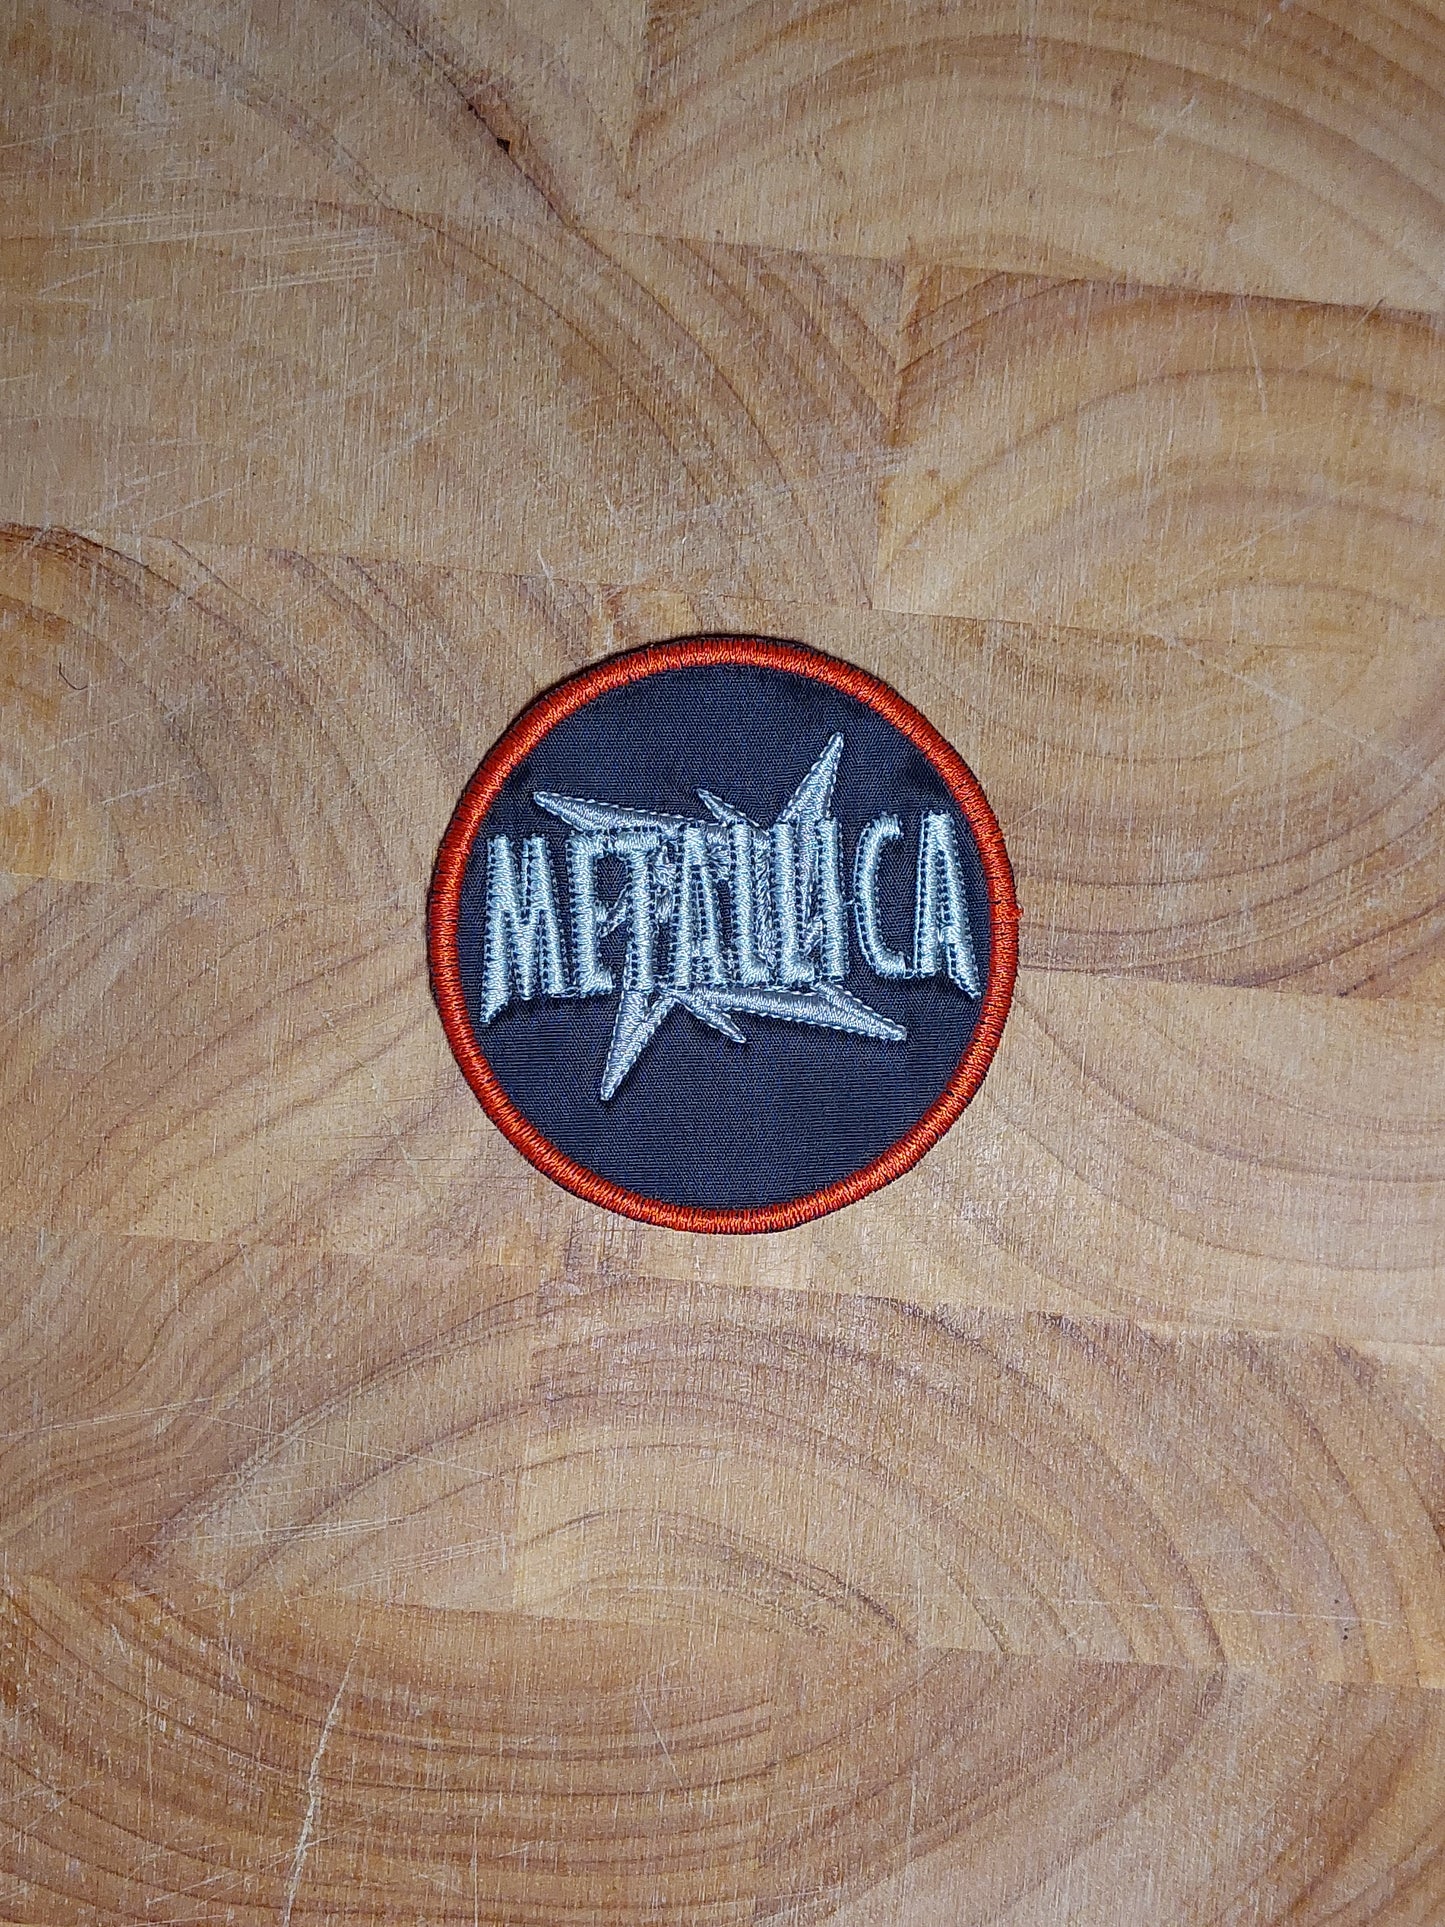 Metallica embroidered